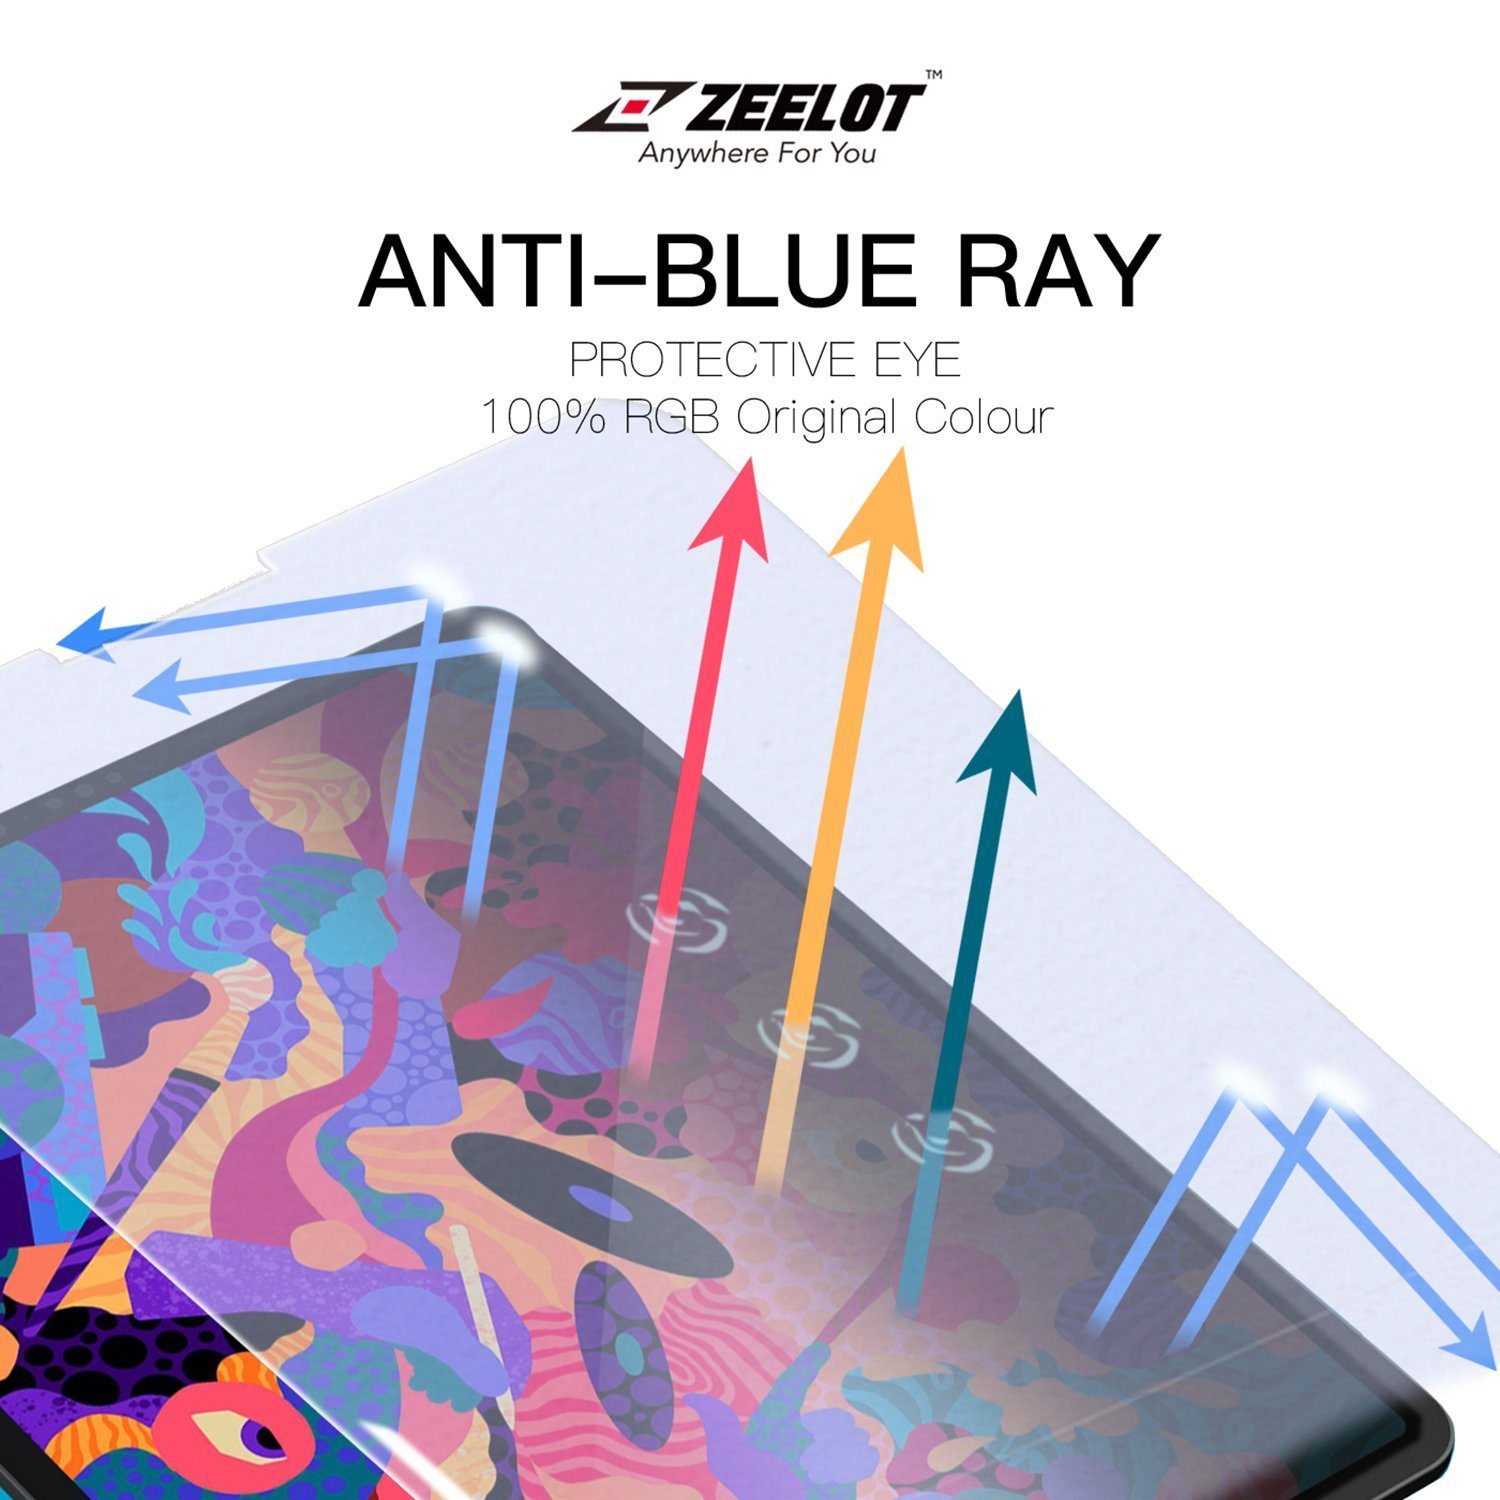 ZEELOT Paper Like Screen Protector for iPad 10.5" (2019/2017), Anti Blue Ray Default ZEELOT 